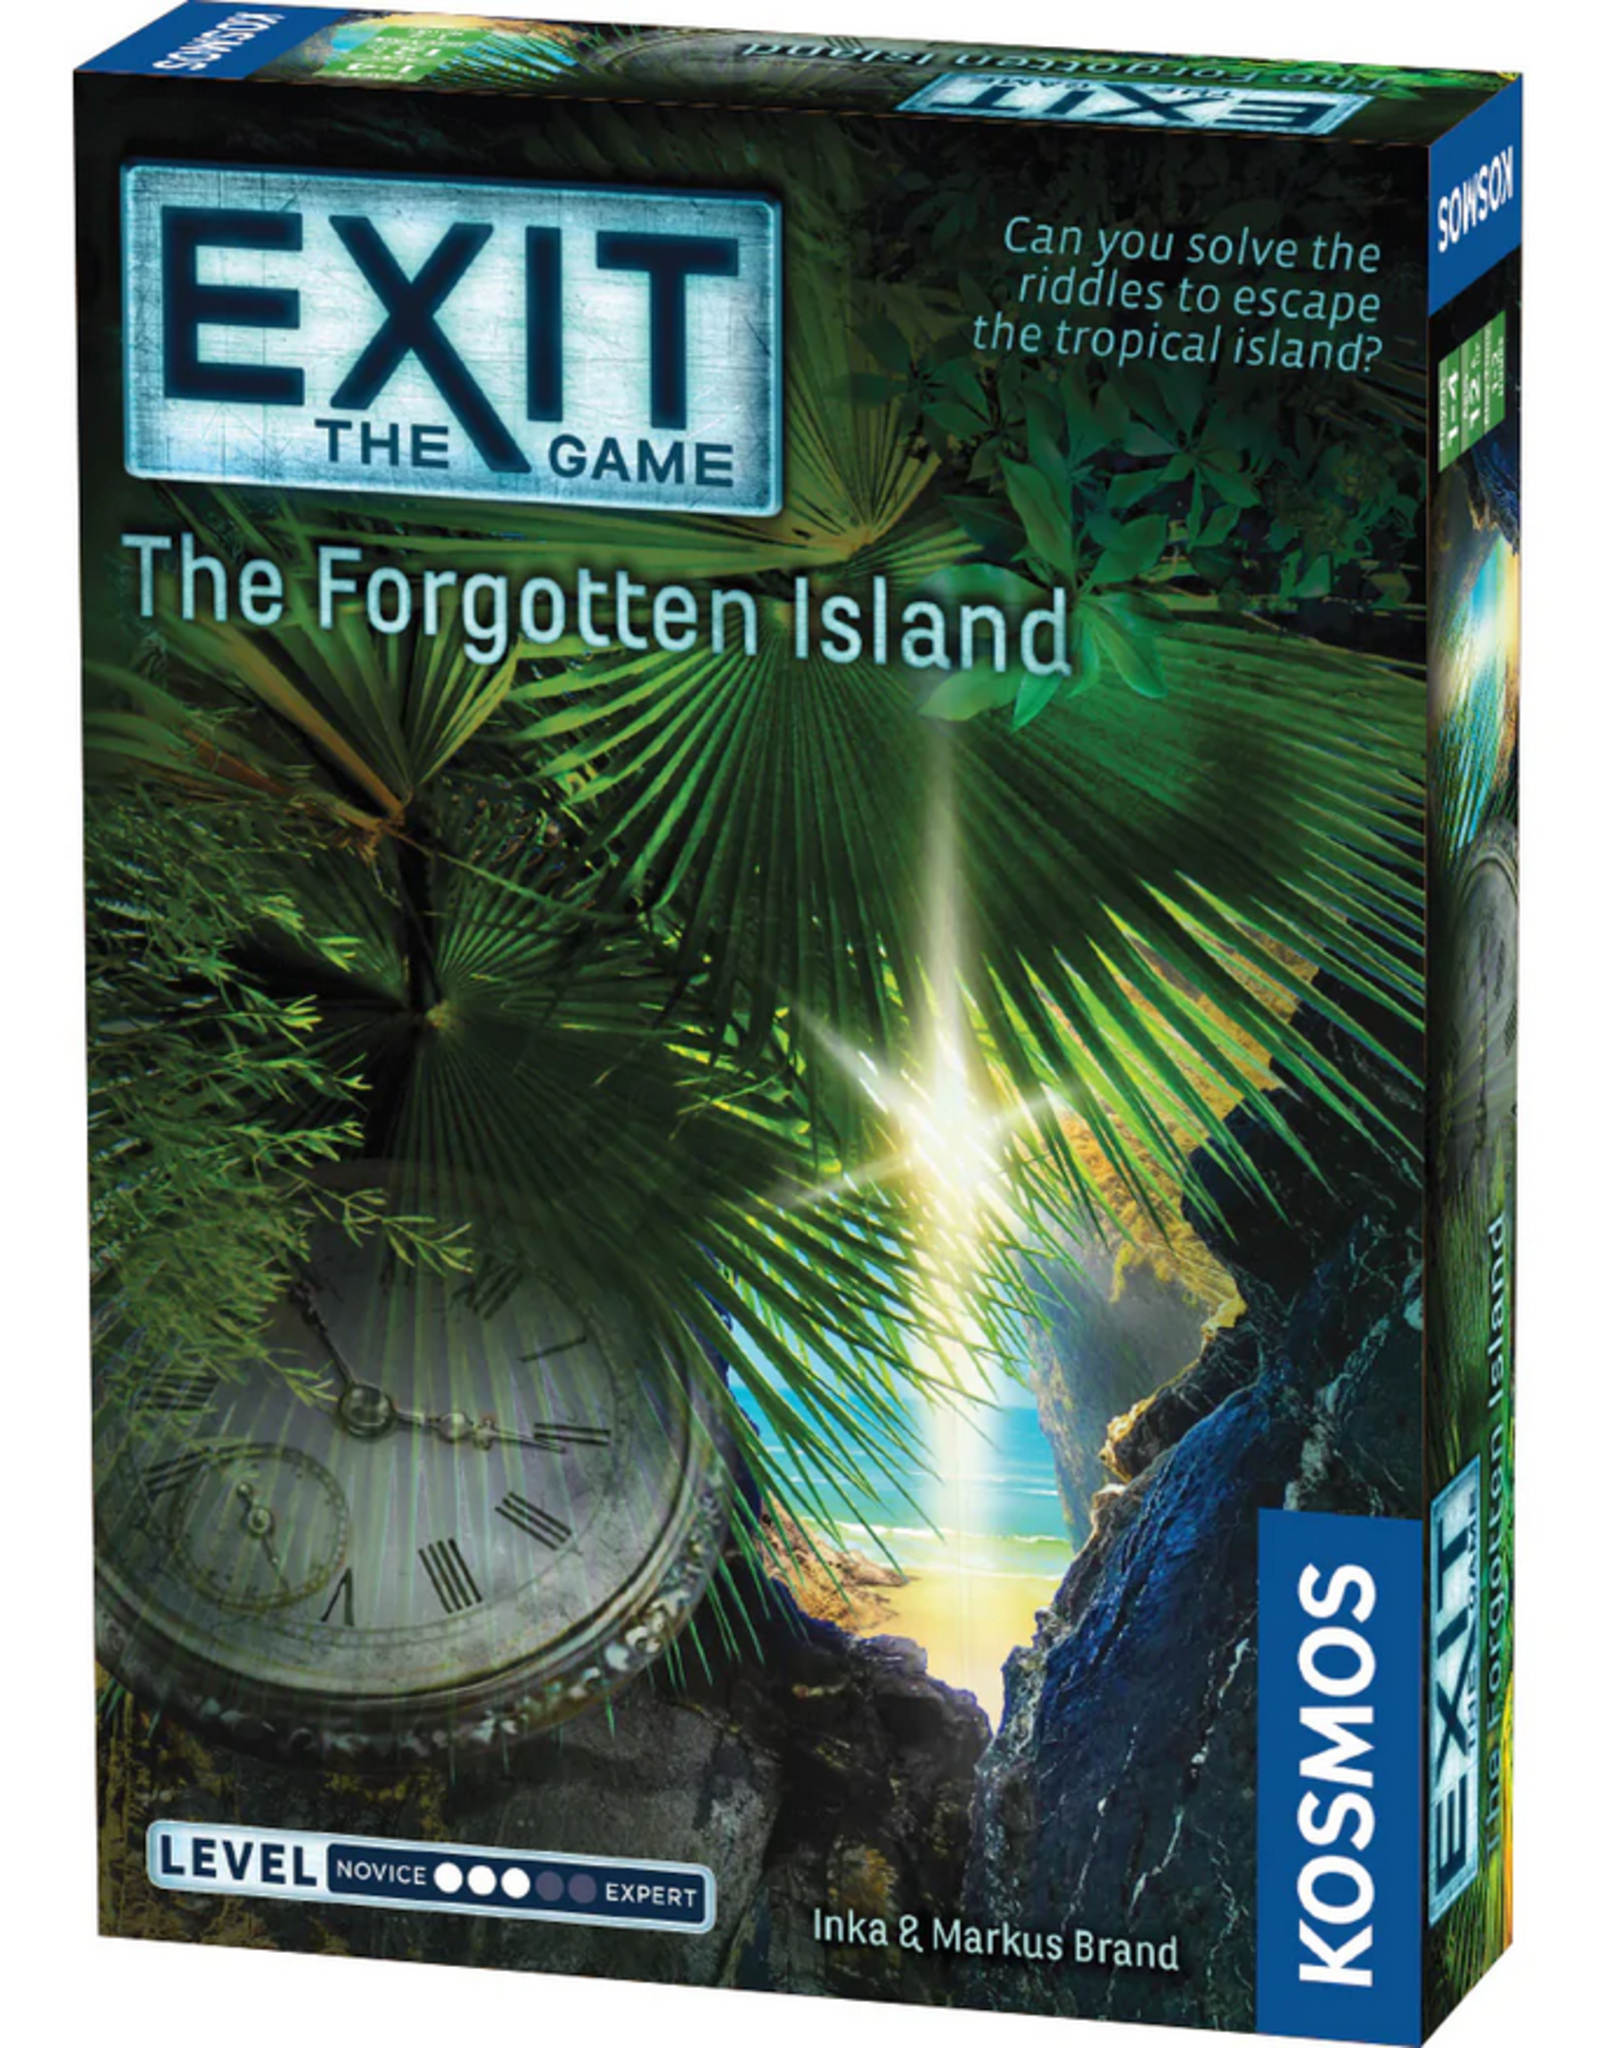 Thames & Kosmos Exit: The Game - The Forgotten Island